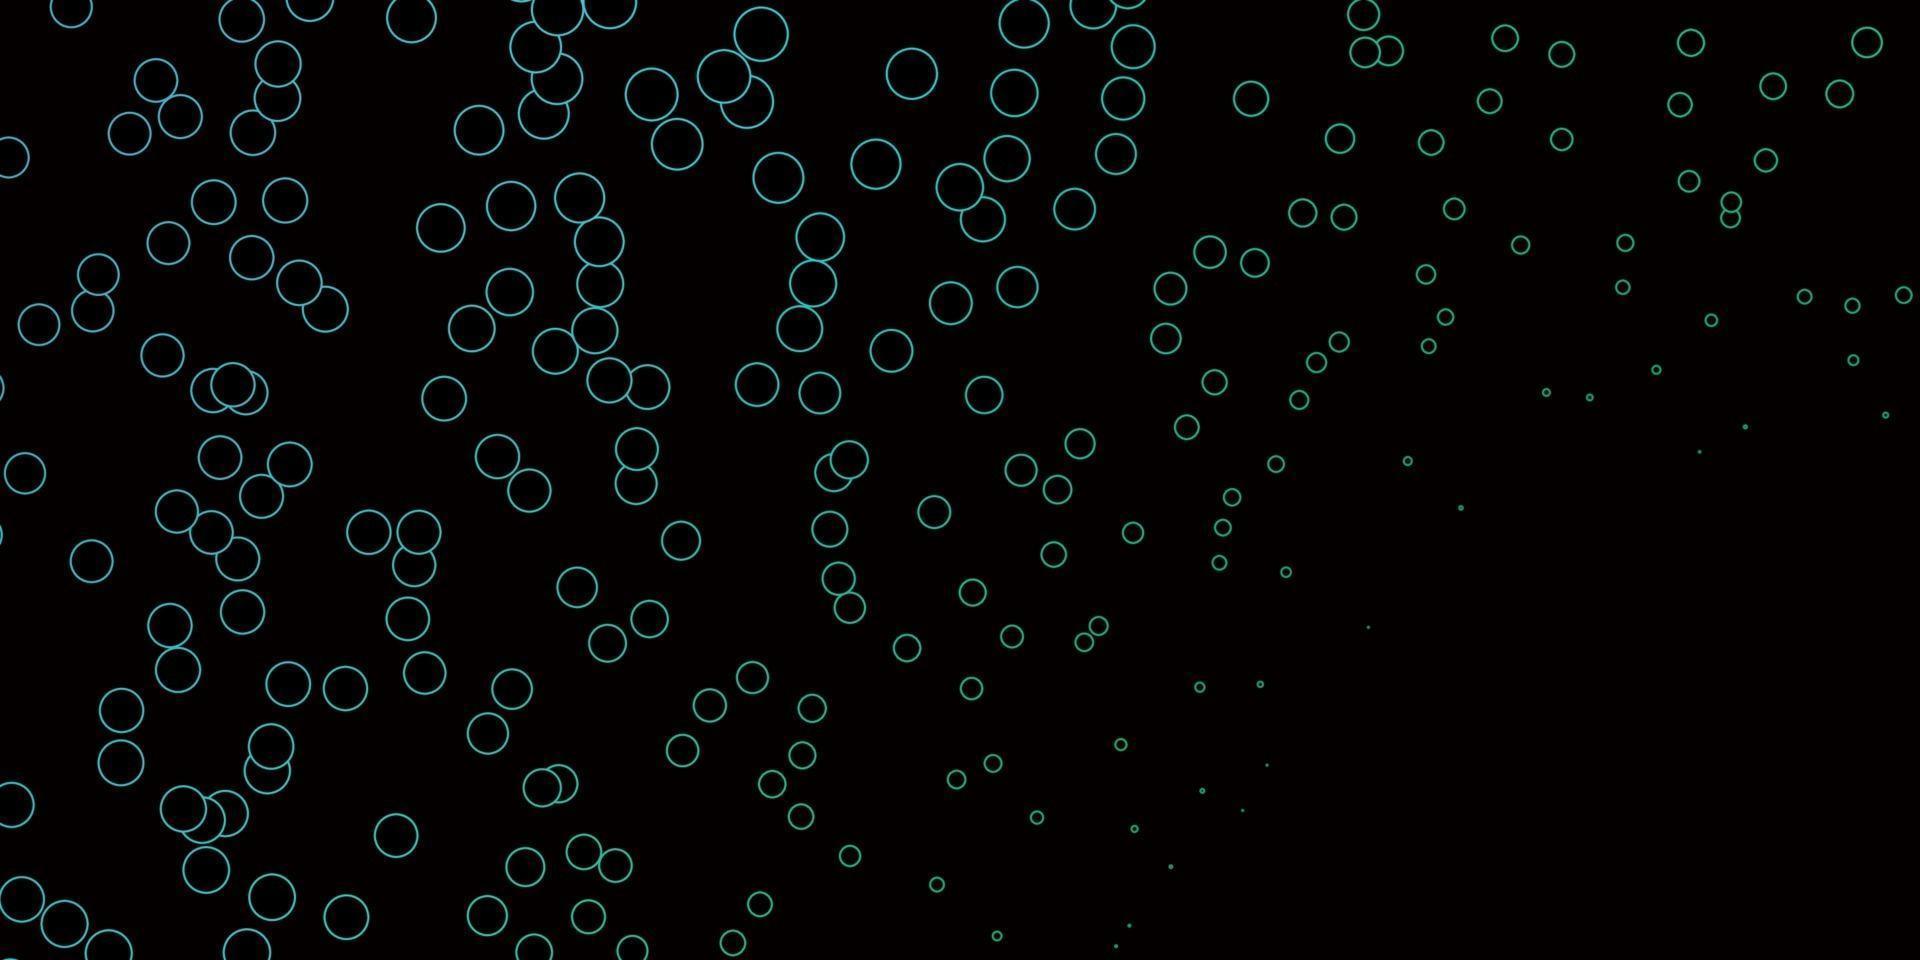 Dark Green vector background with spots.